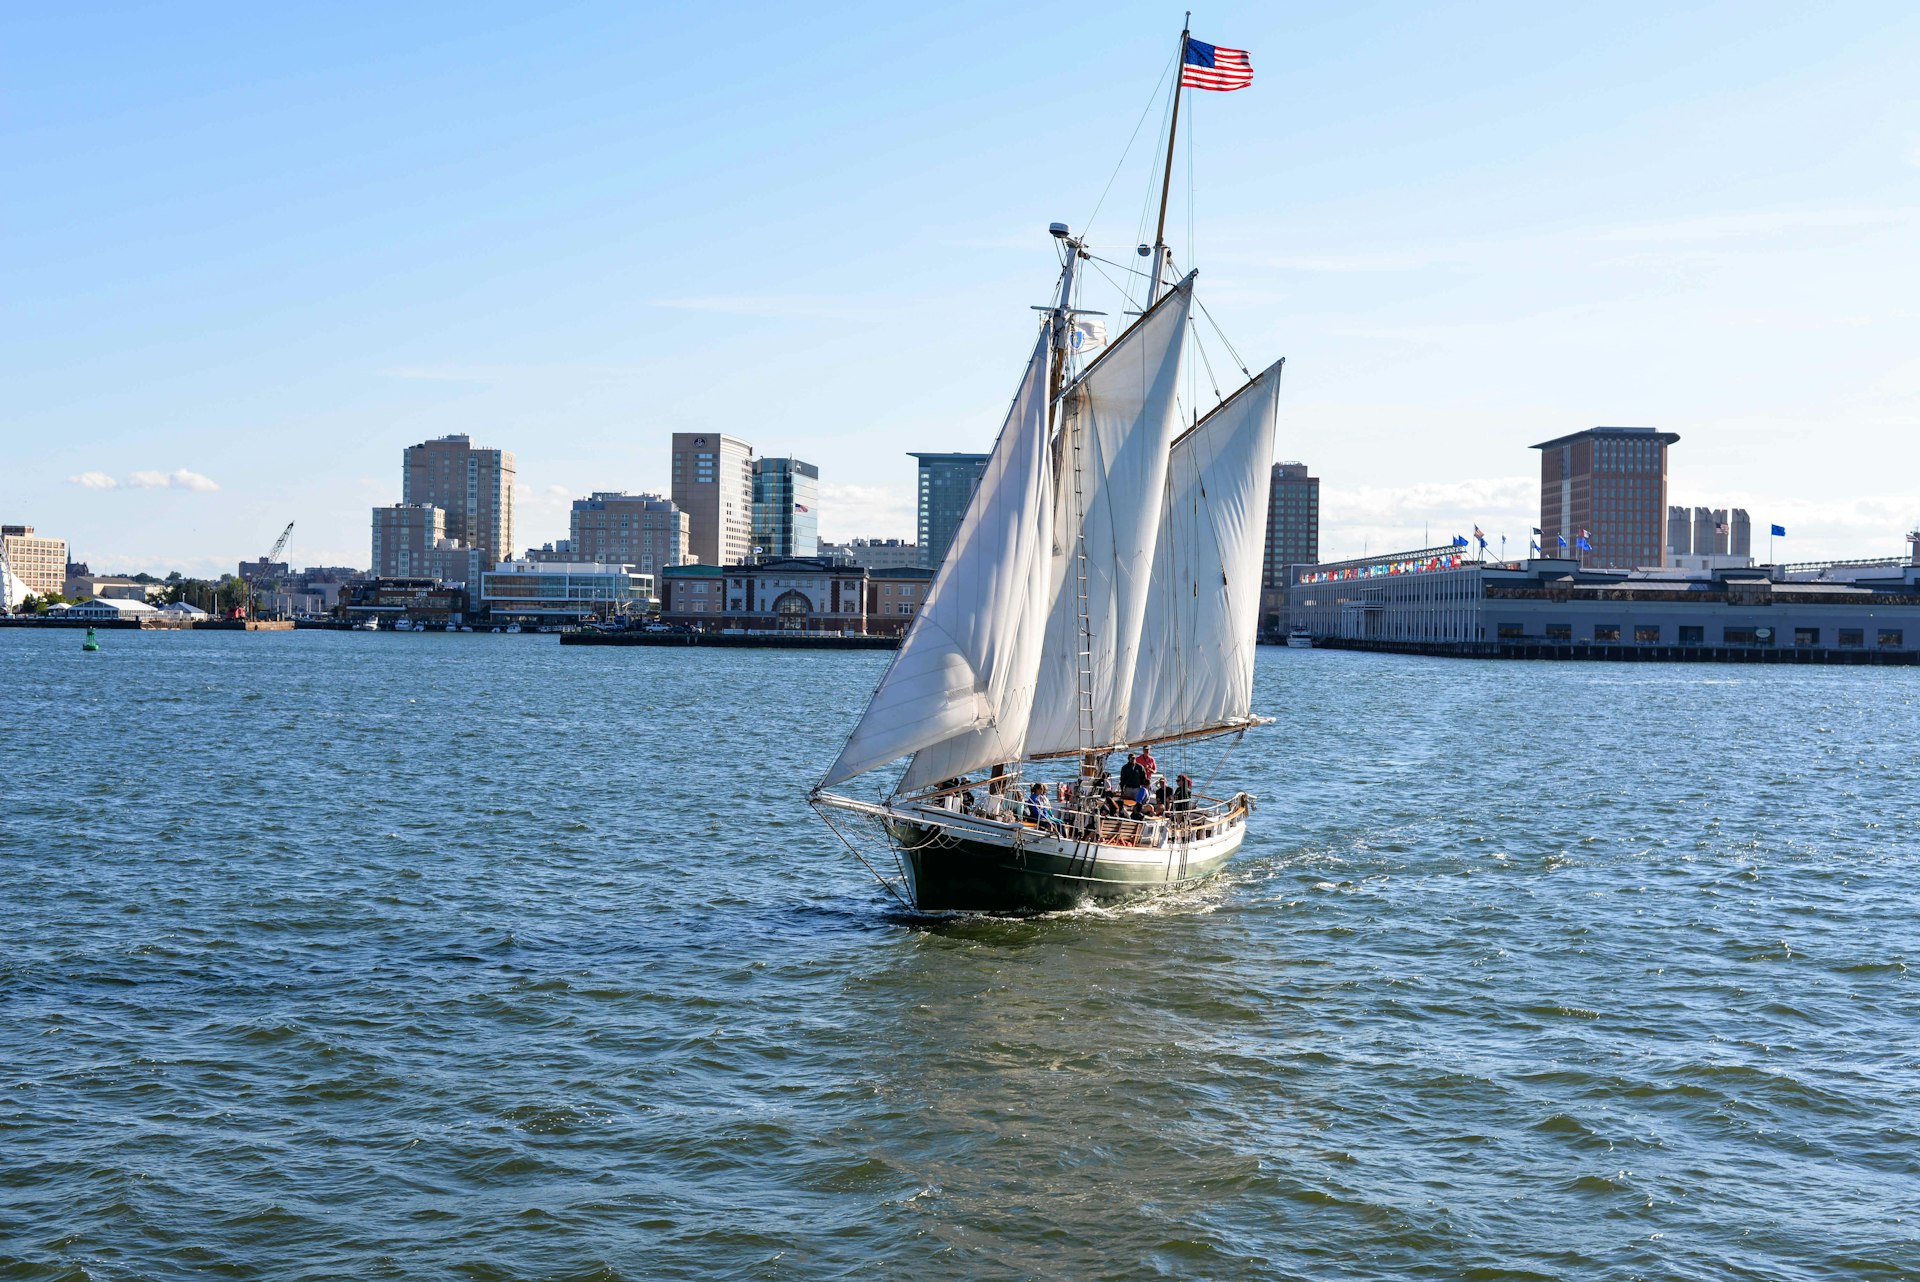 Liberty Star schooner sailing in the Boston harbor. Image by massmatt / CC BY 2.0